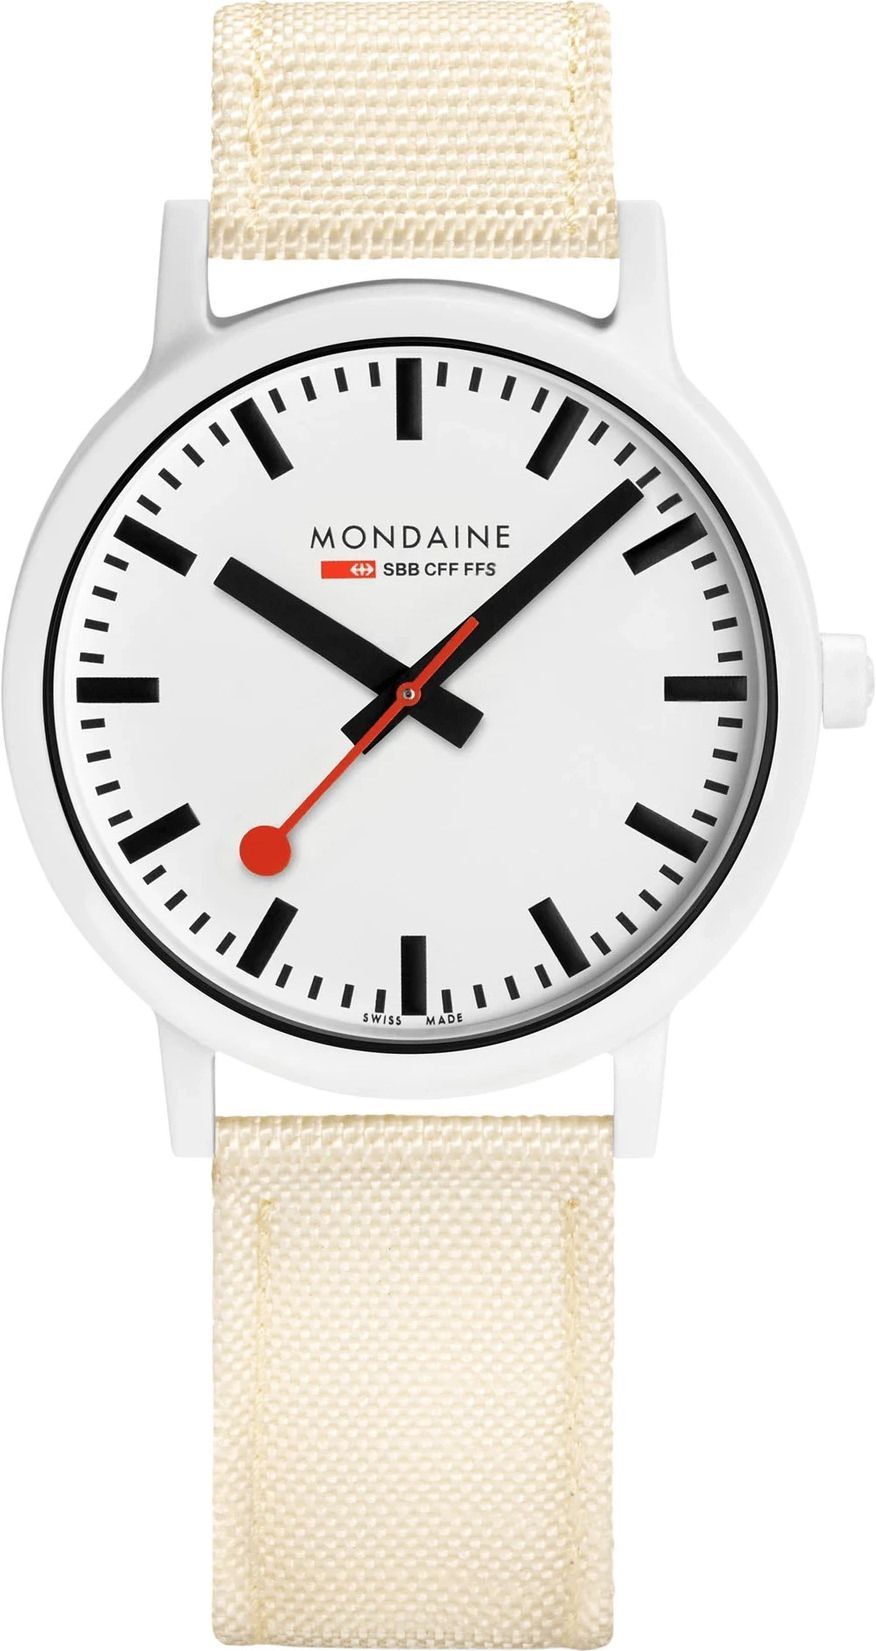 Mondaine  41 mm Watch in White Dial For Men - 1